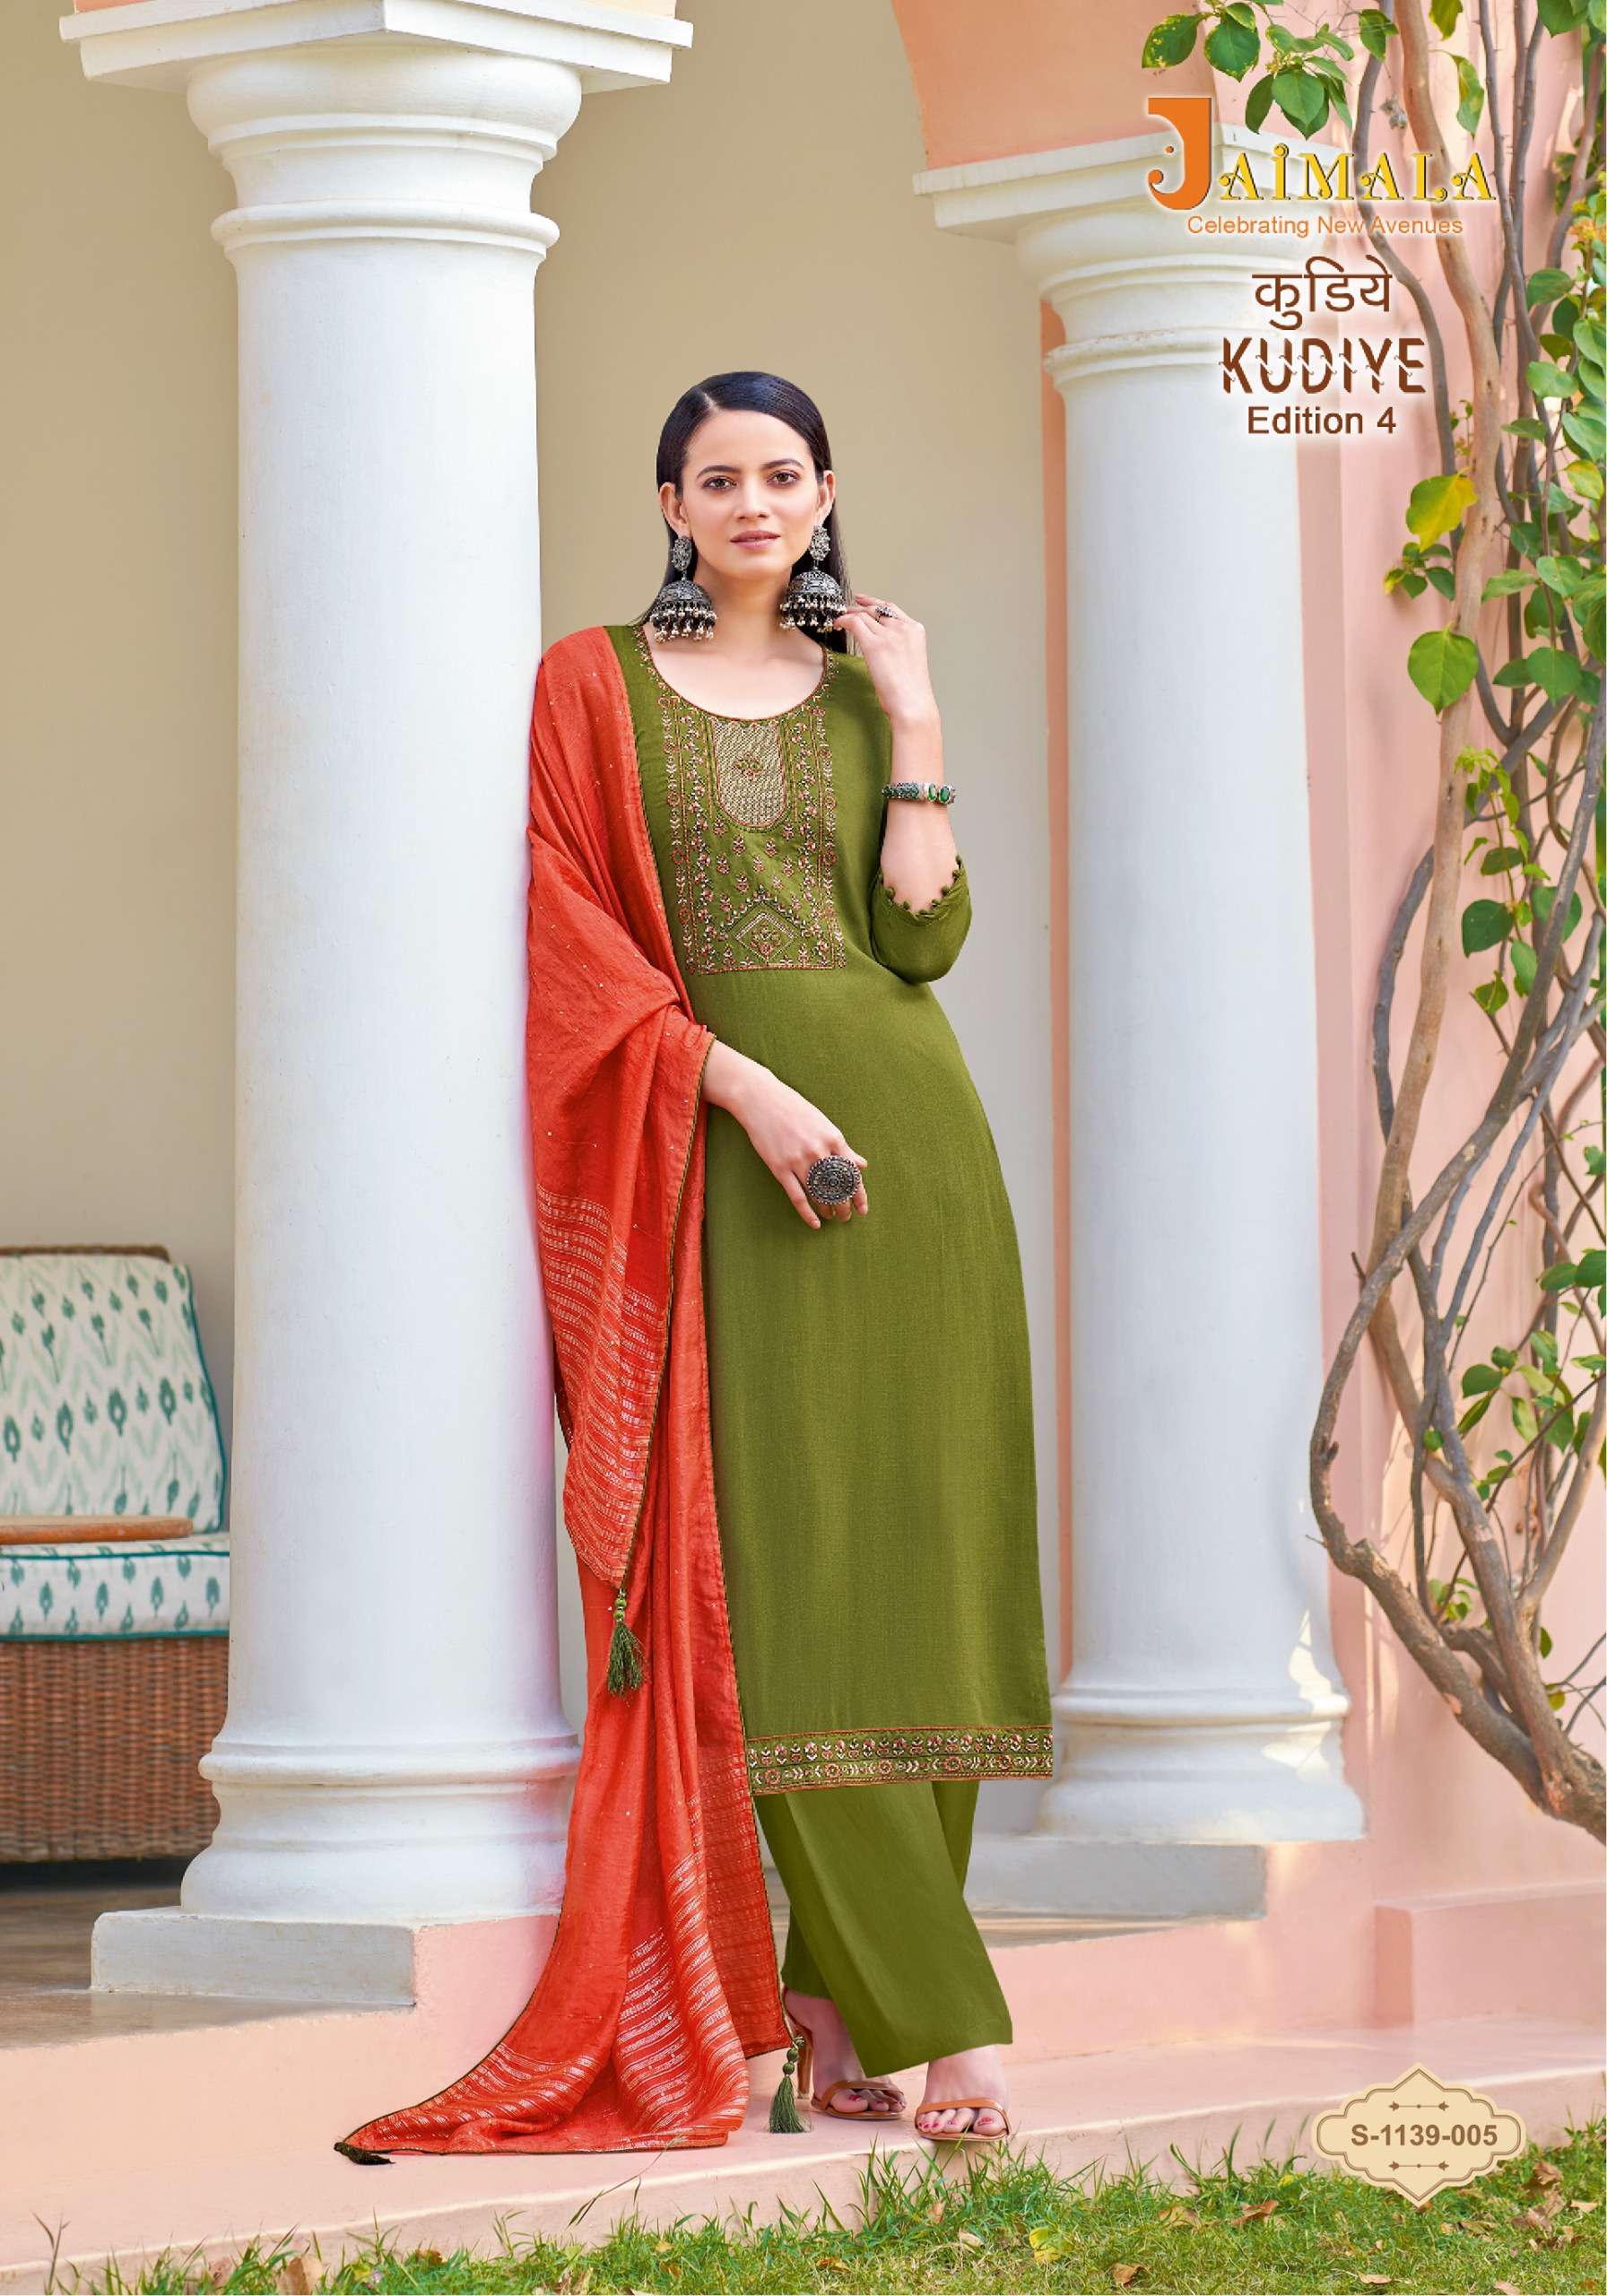 jaimala alok suit kudiye edition-4 series latest fancy salwar kameez wholesaler surat gujarat